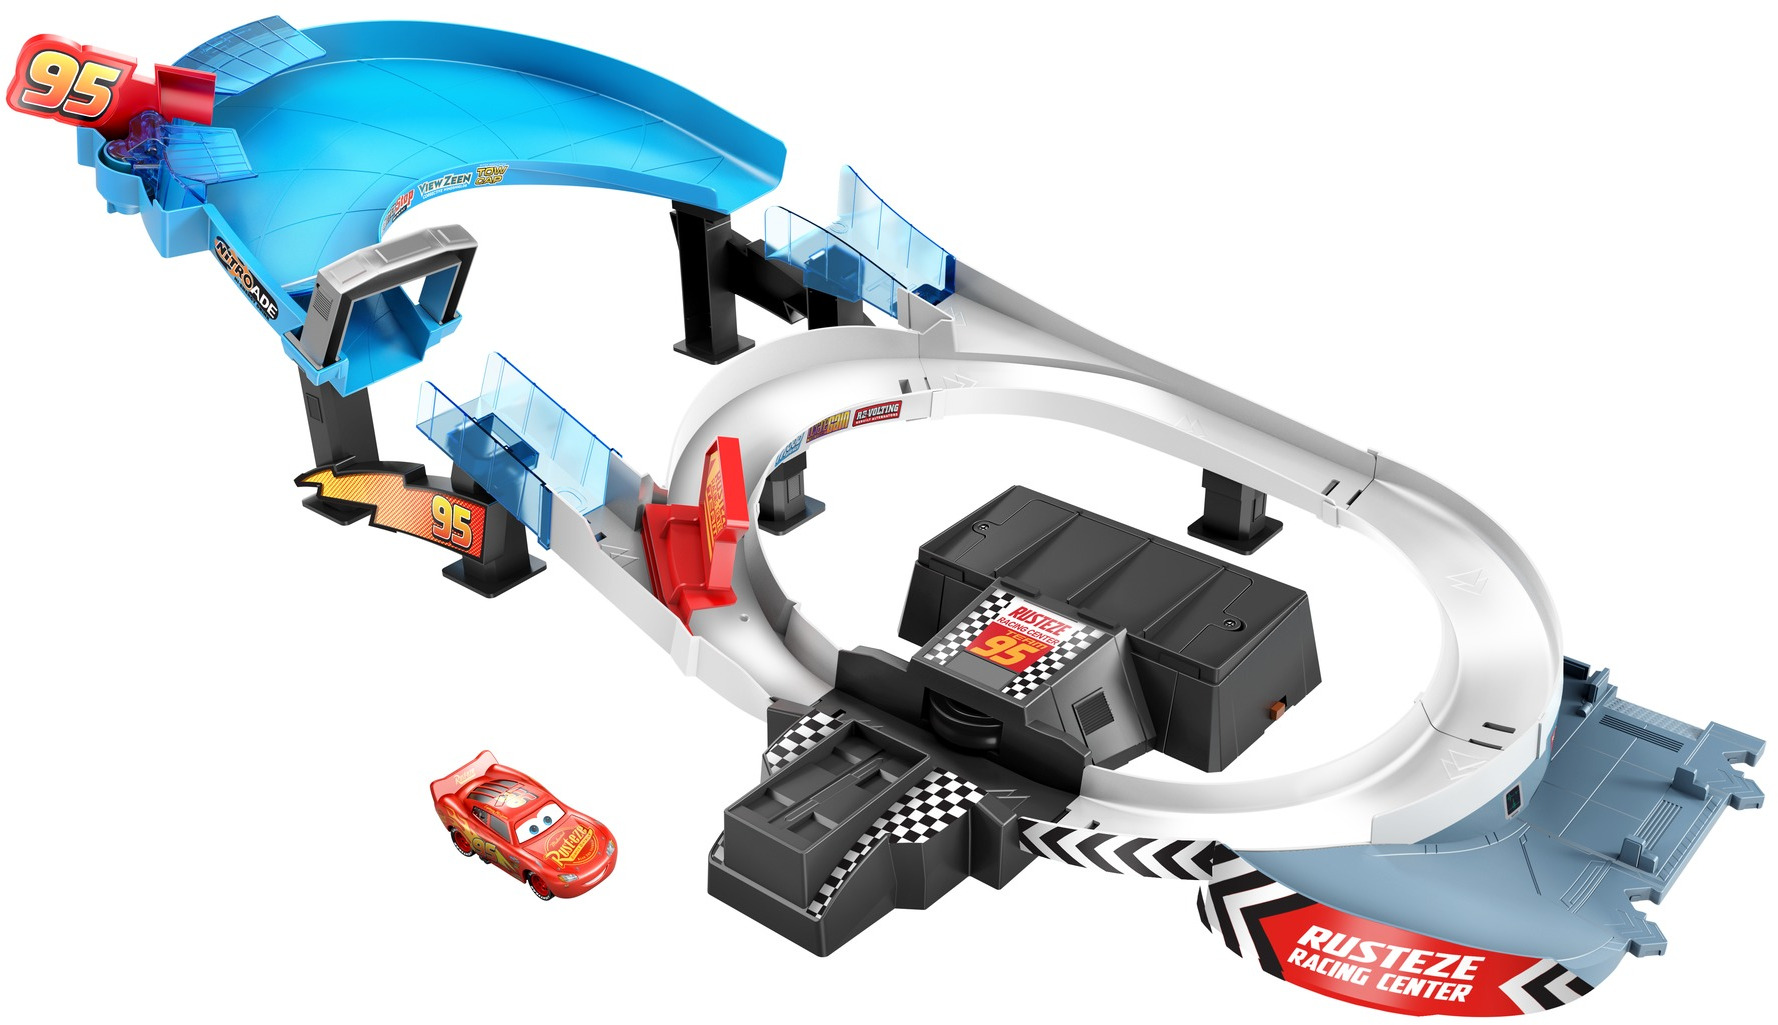 Disney Pixar Cars Rusteze Double Circuit Speedway Playset with Lightning McQueen Toy Car - image 1 of 7